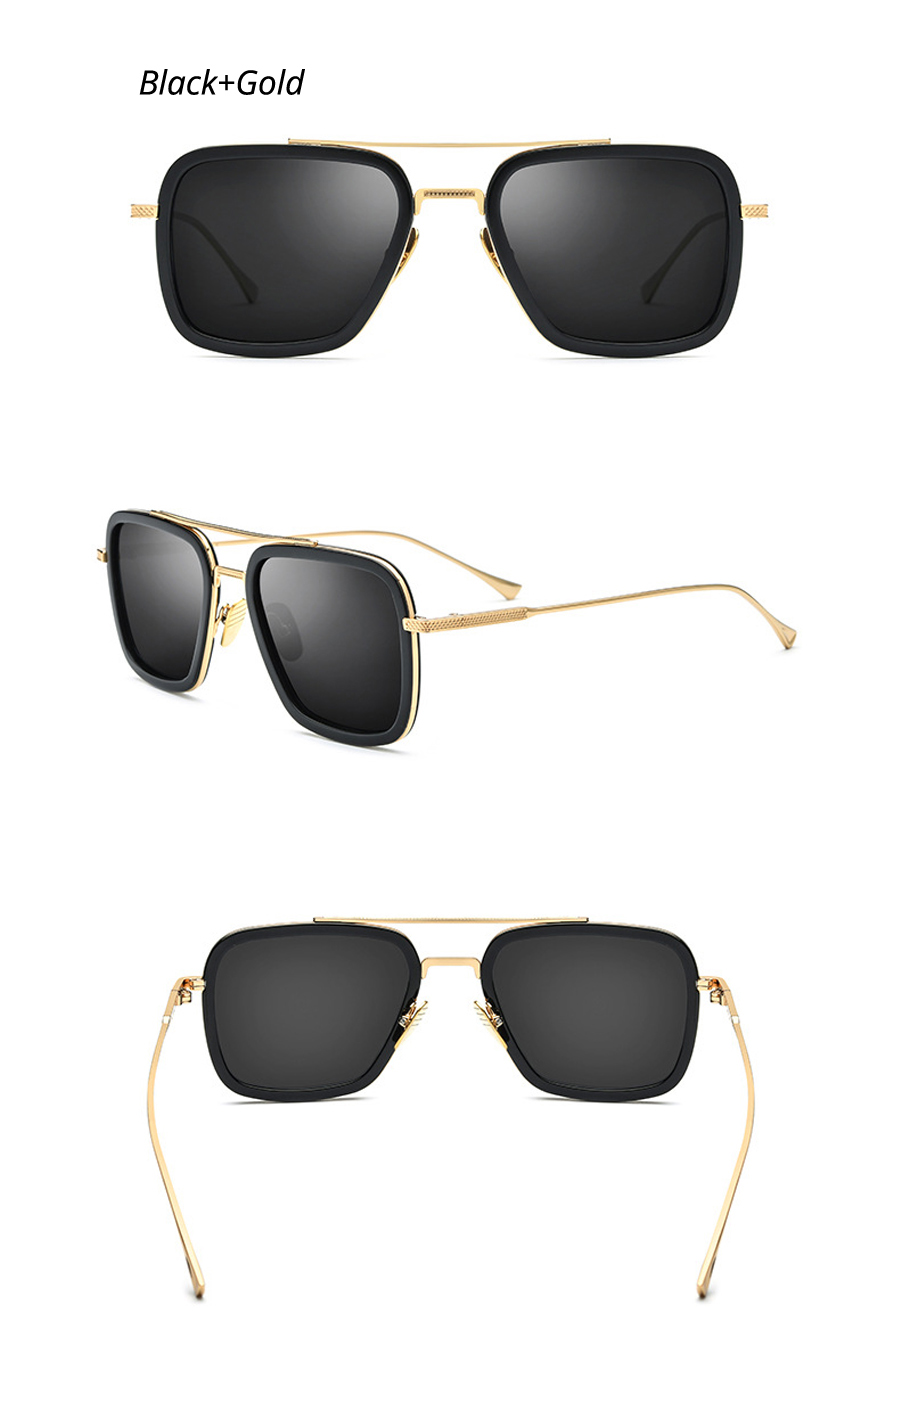 2020-Men-Polarized-Sunglasses-3-Colors-SiliverGoldBlue-Square-Metal-Frame-Come-With-Box-4000342657125